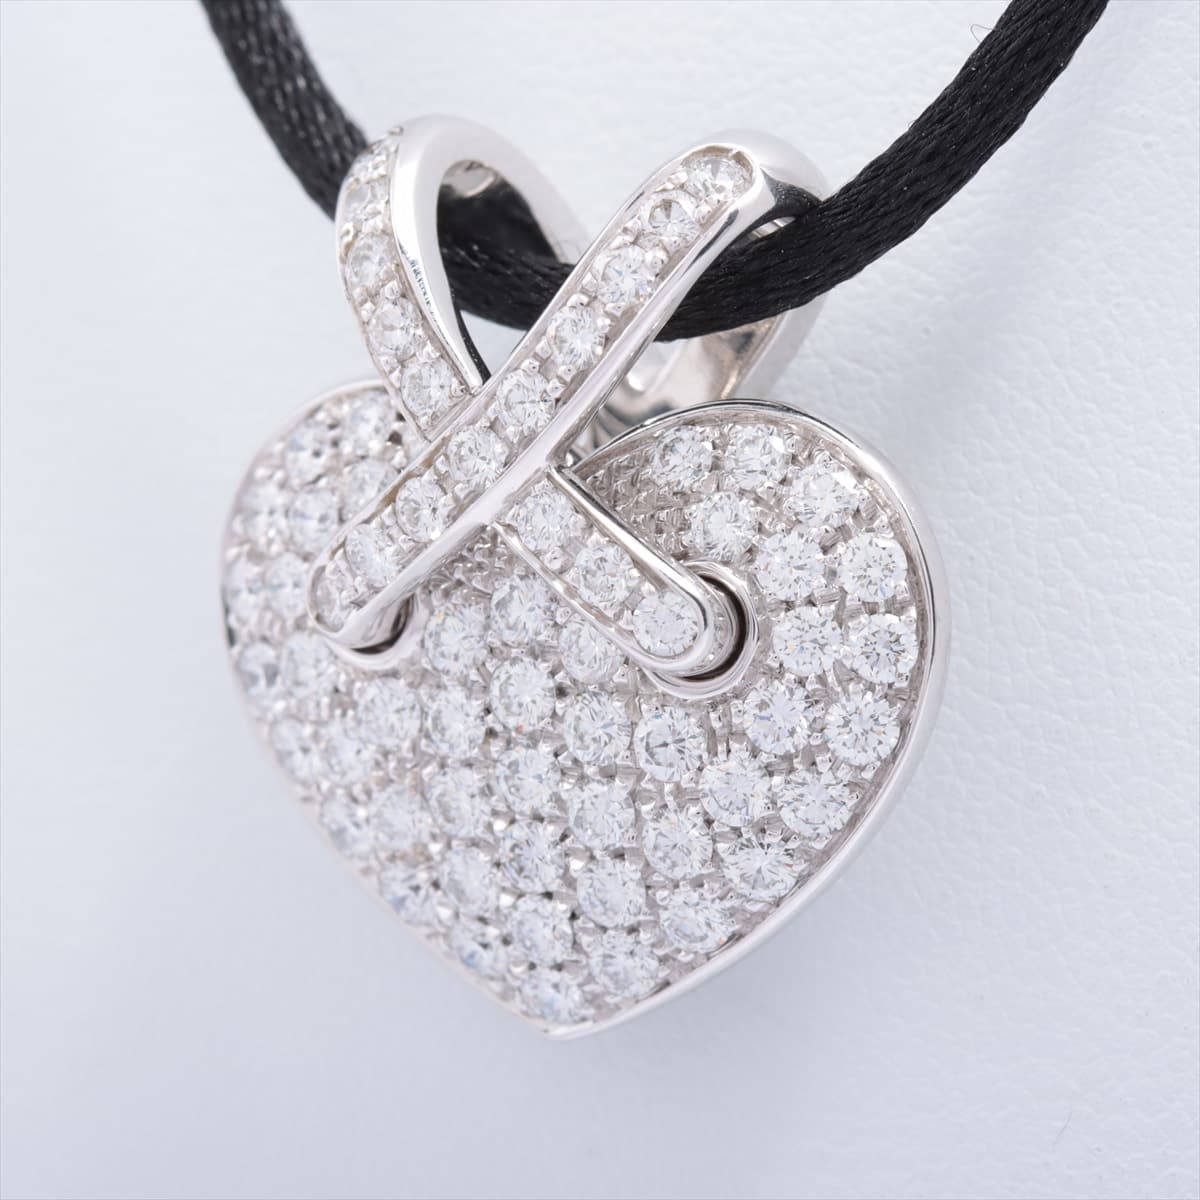 Chaumet Liens Doo Chaumet hearts diamond Necklace 750 WG